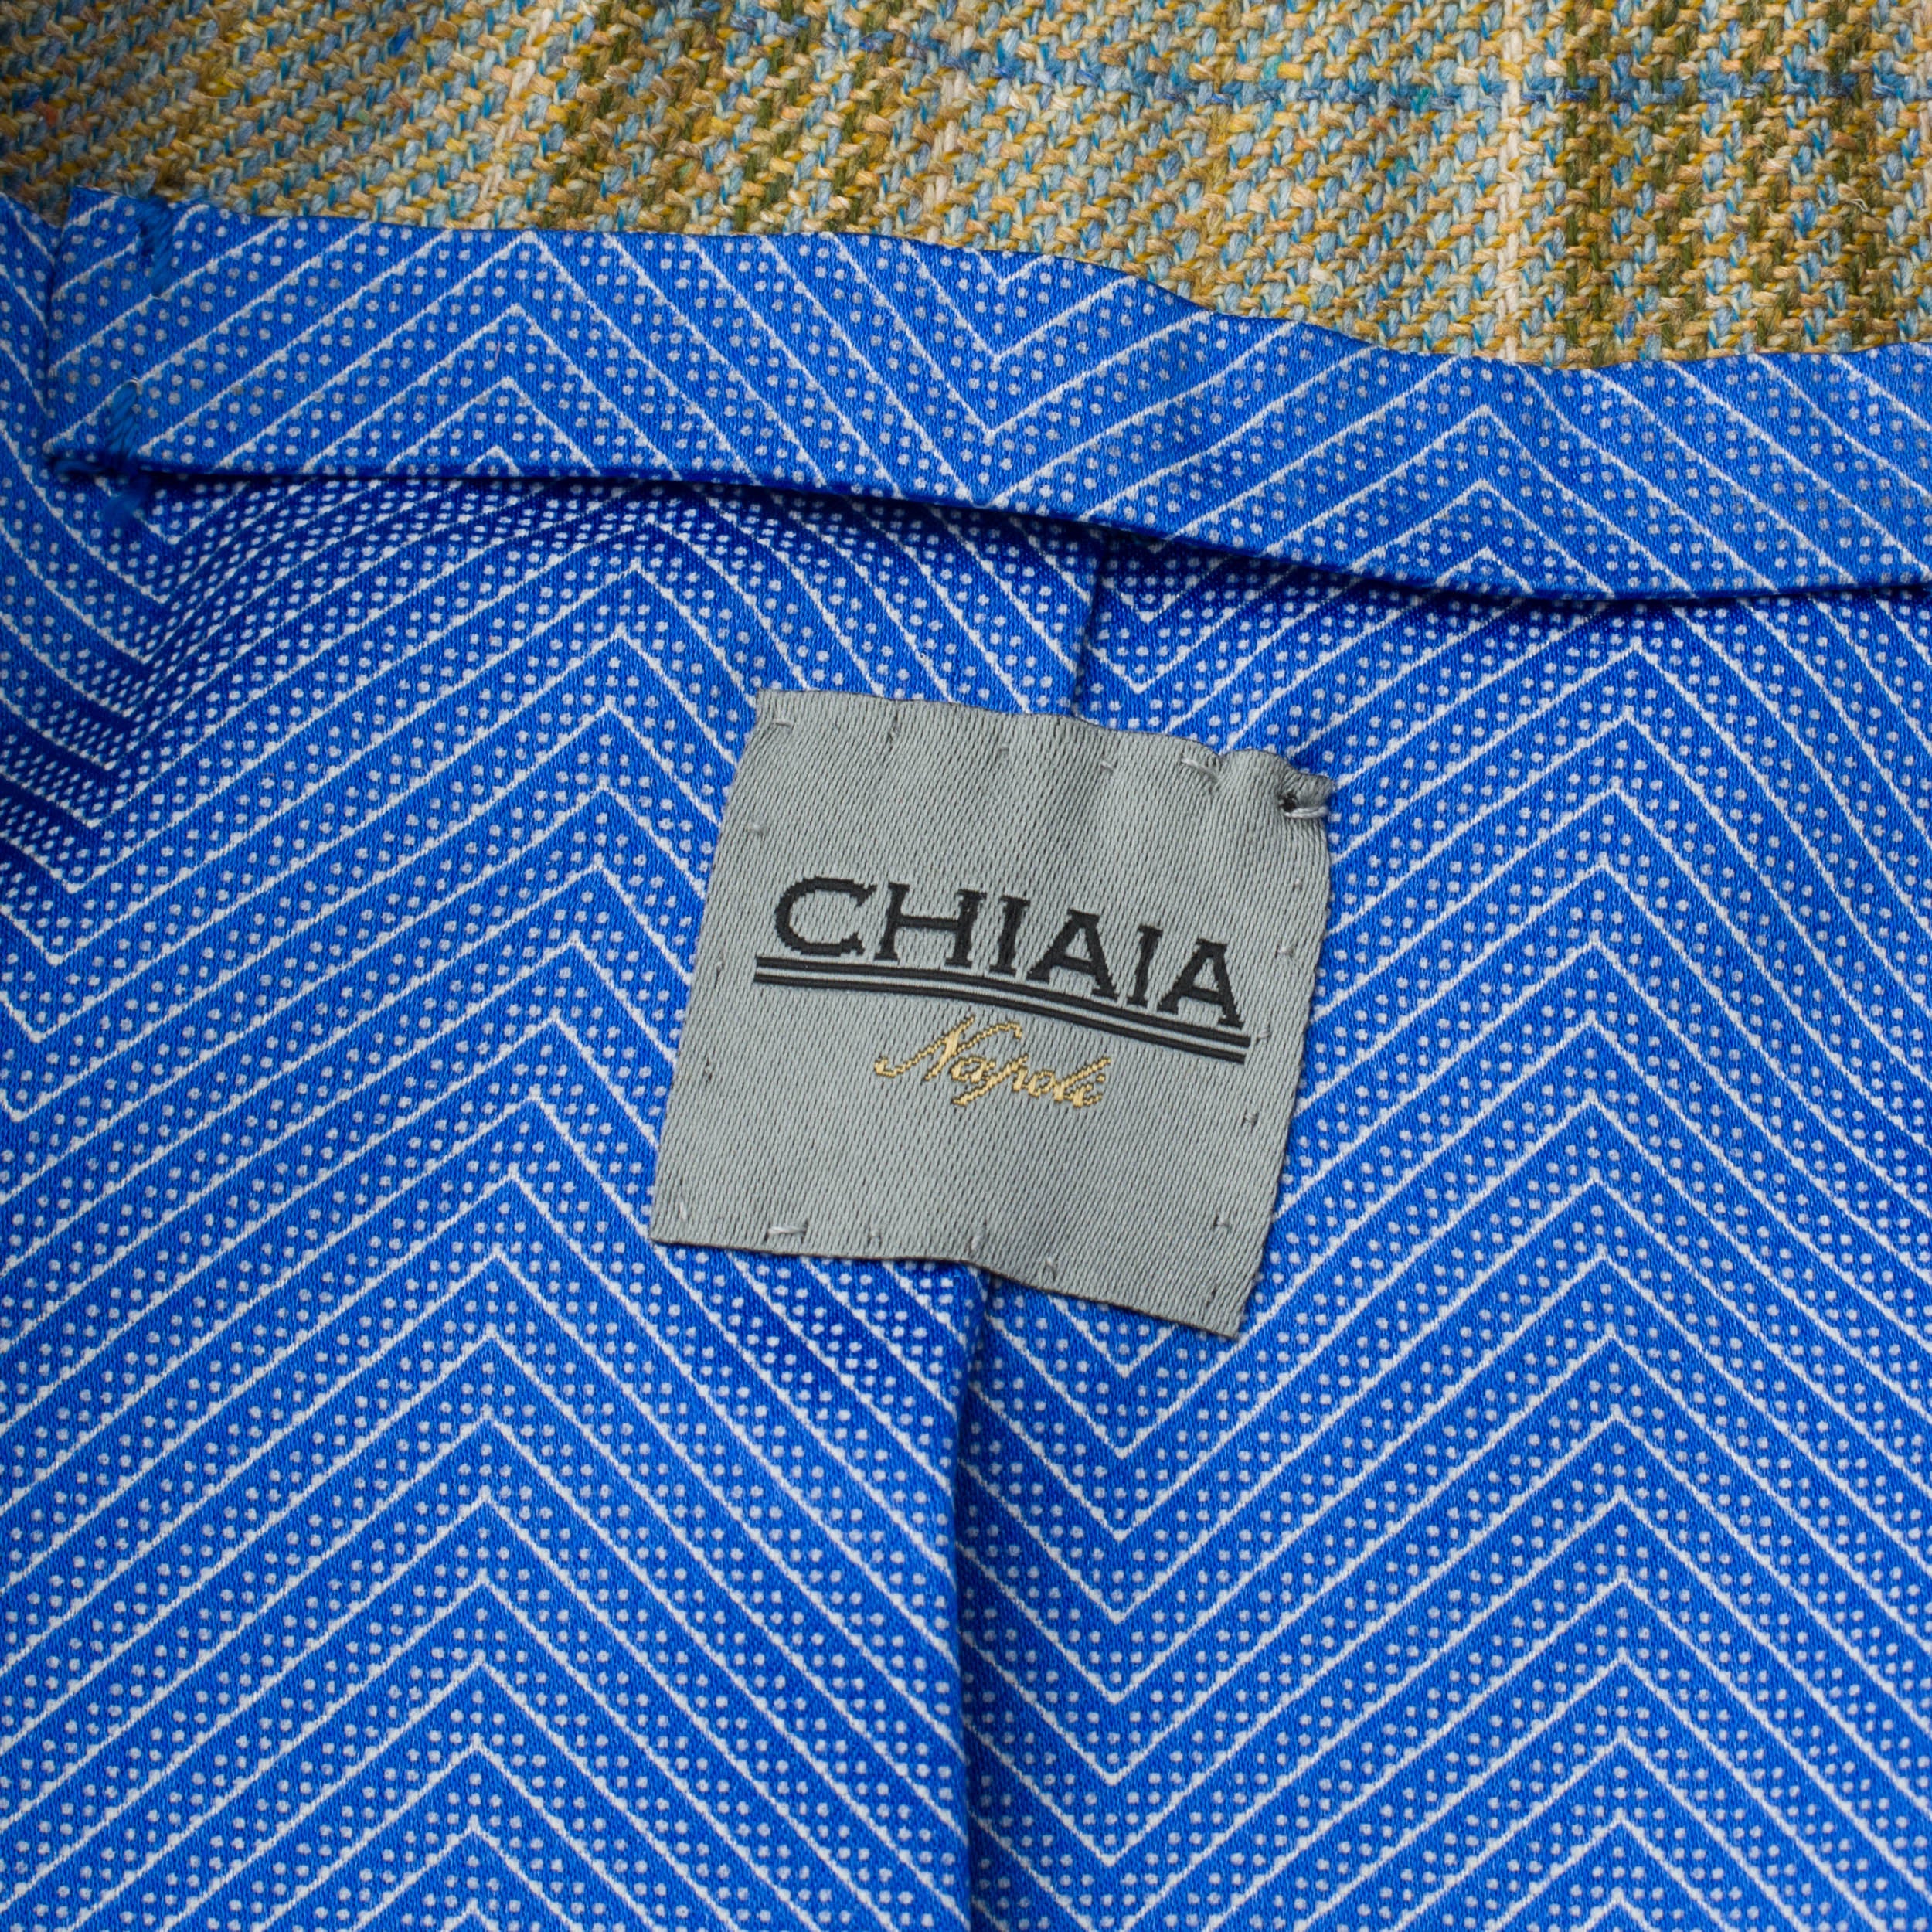 Sartoria CHIAIA Bespoke Handmade Plaid Cashmere Jacket EU 48 NEW US 38